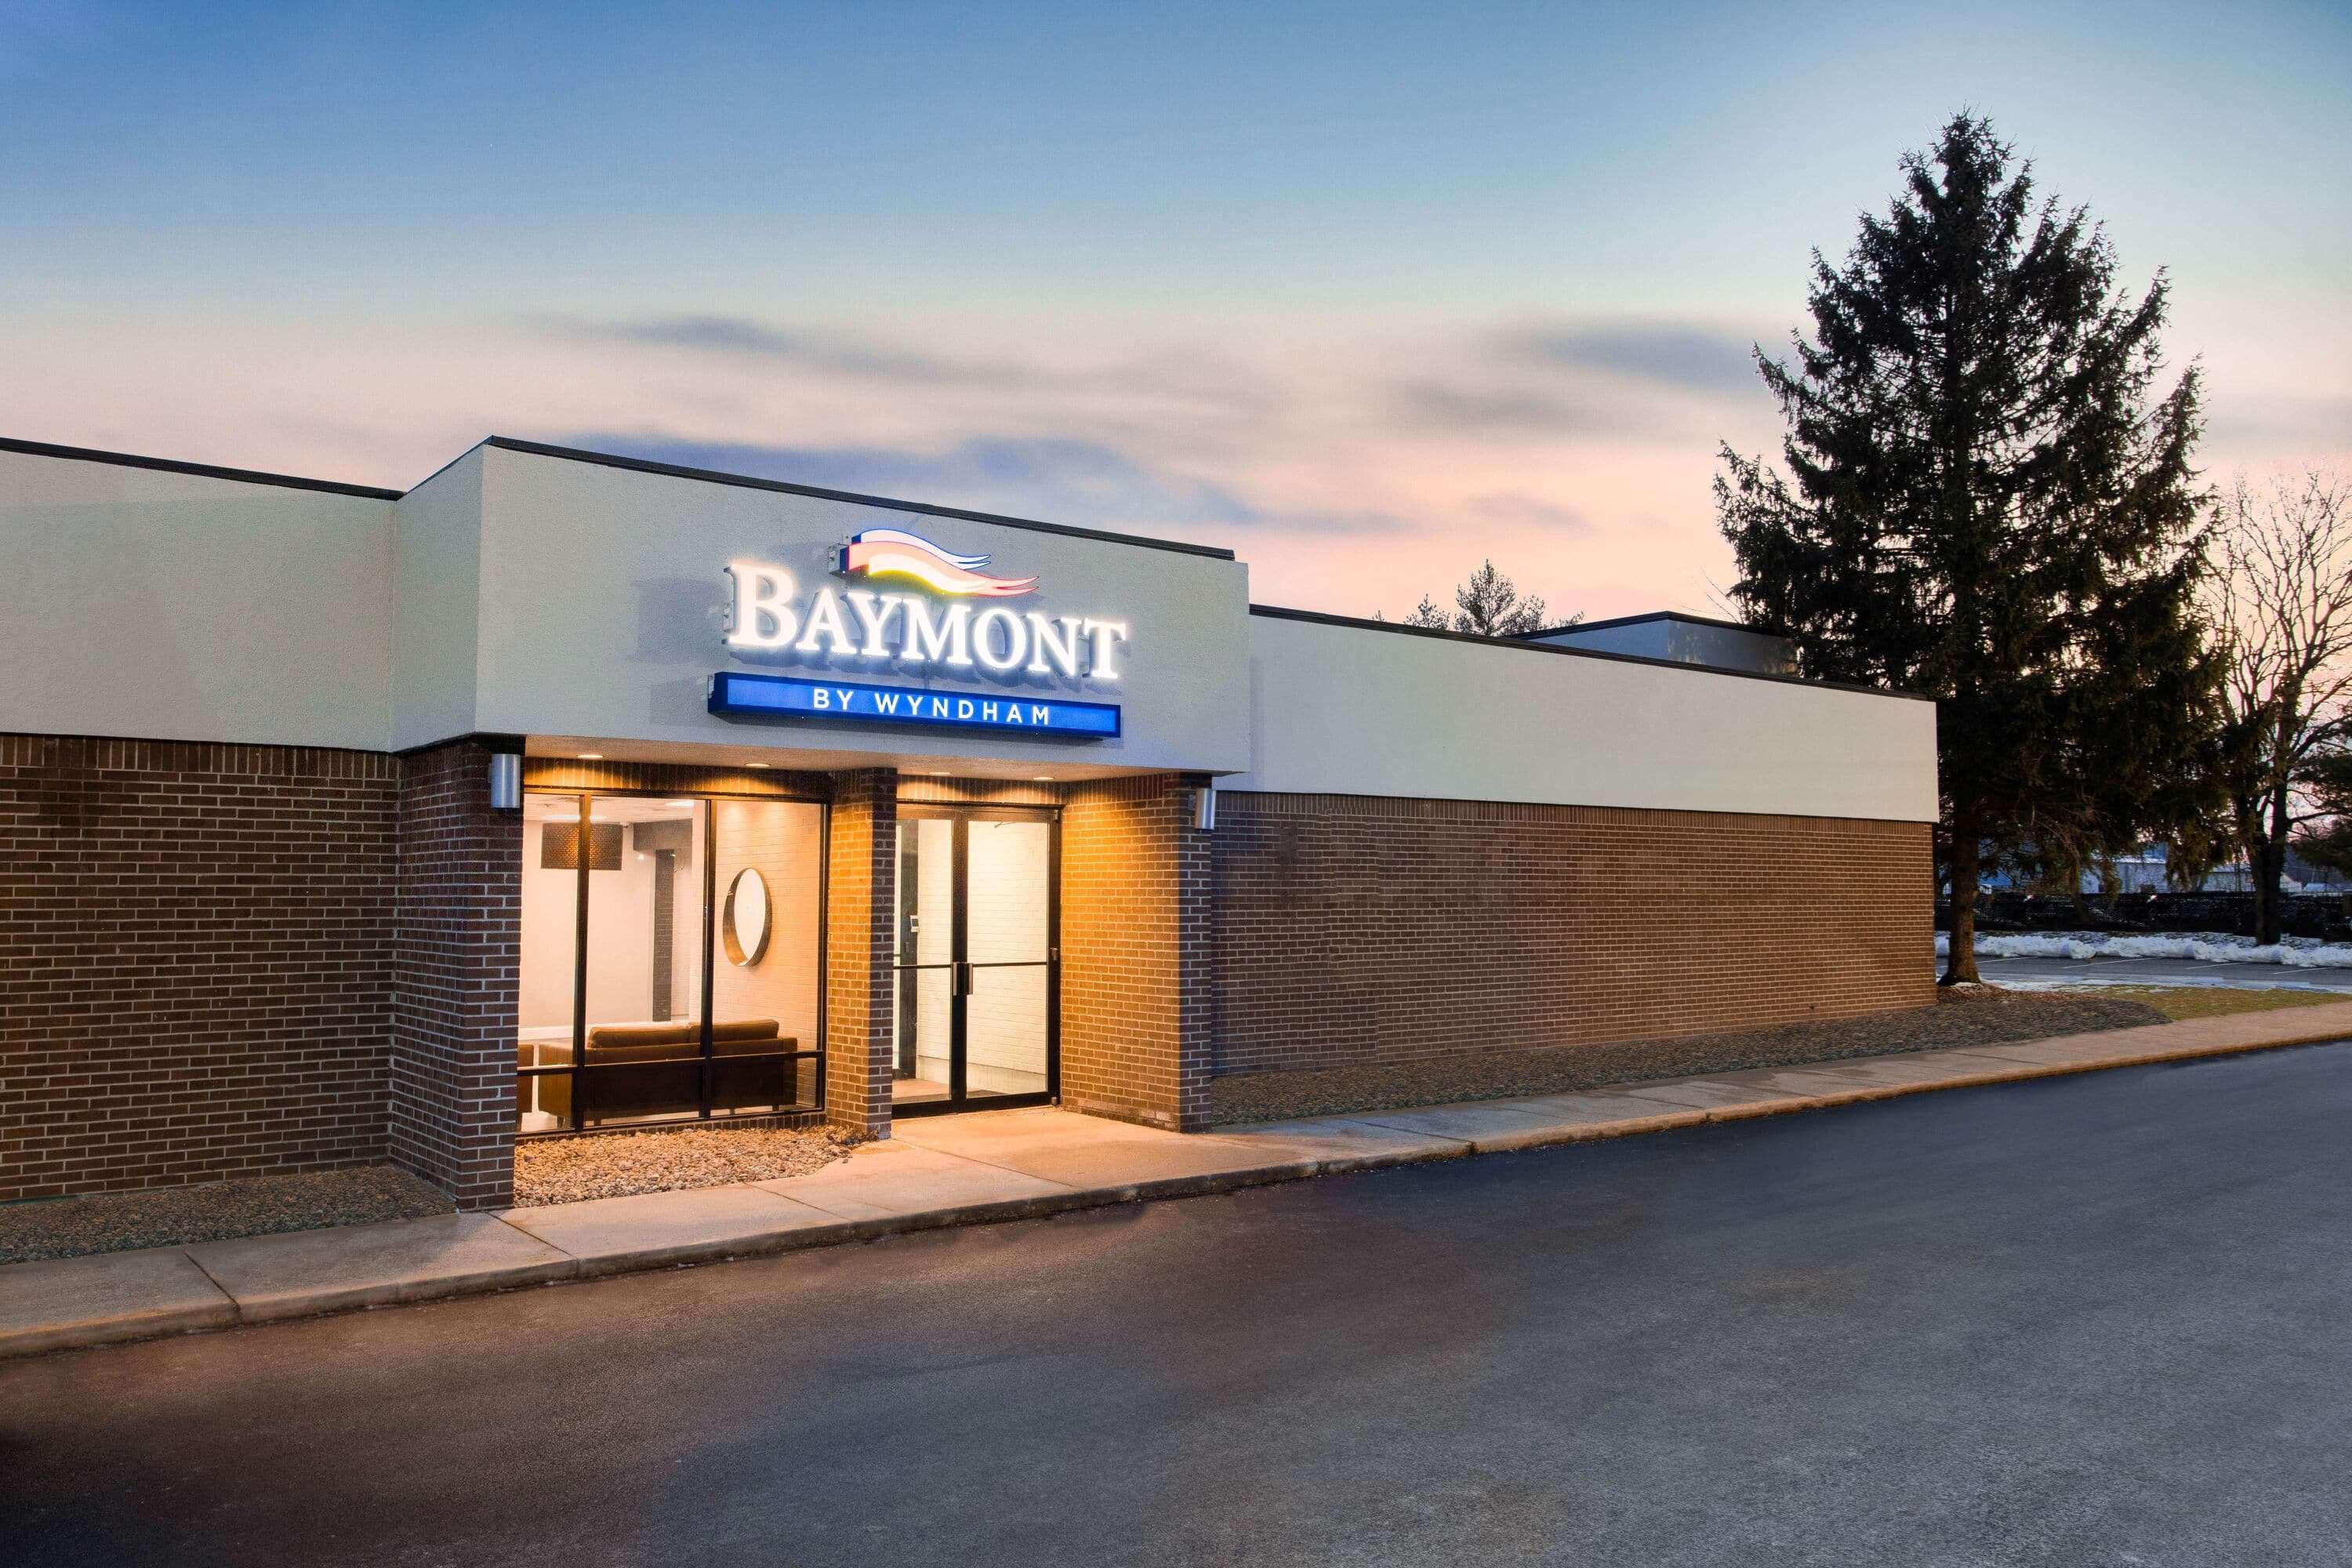 Baymont by Wyndham Greenville OH